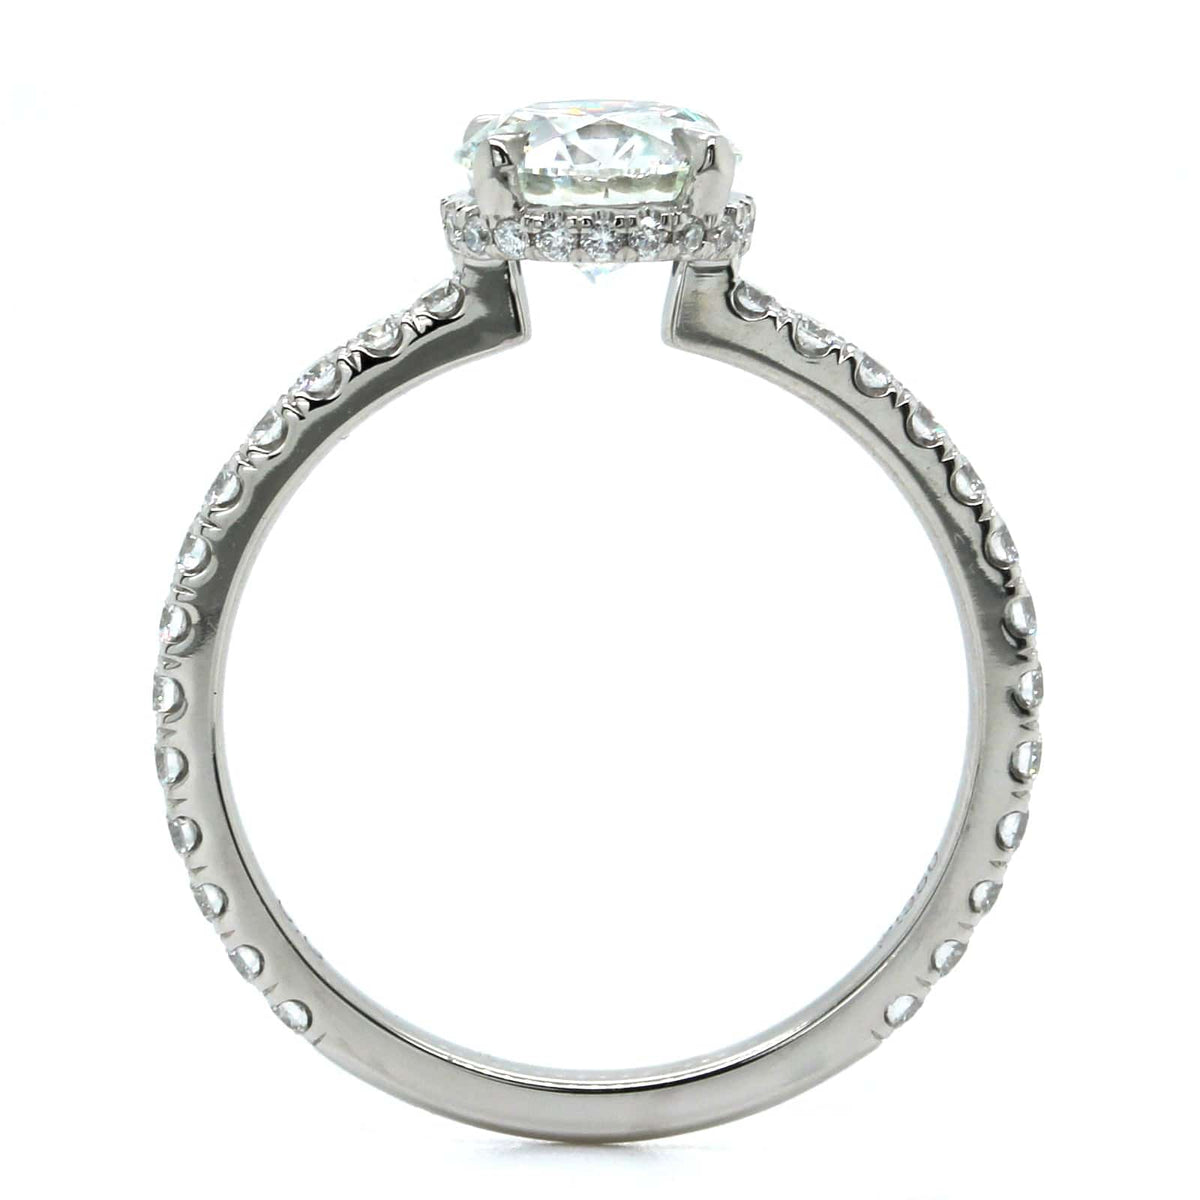 Platinum Round Cut Diamond with Hidden Halo Engagement Ring